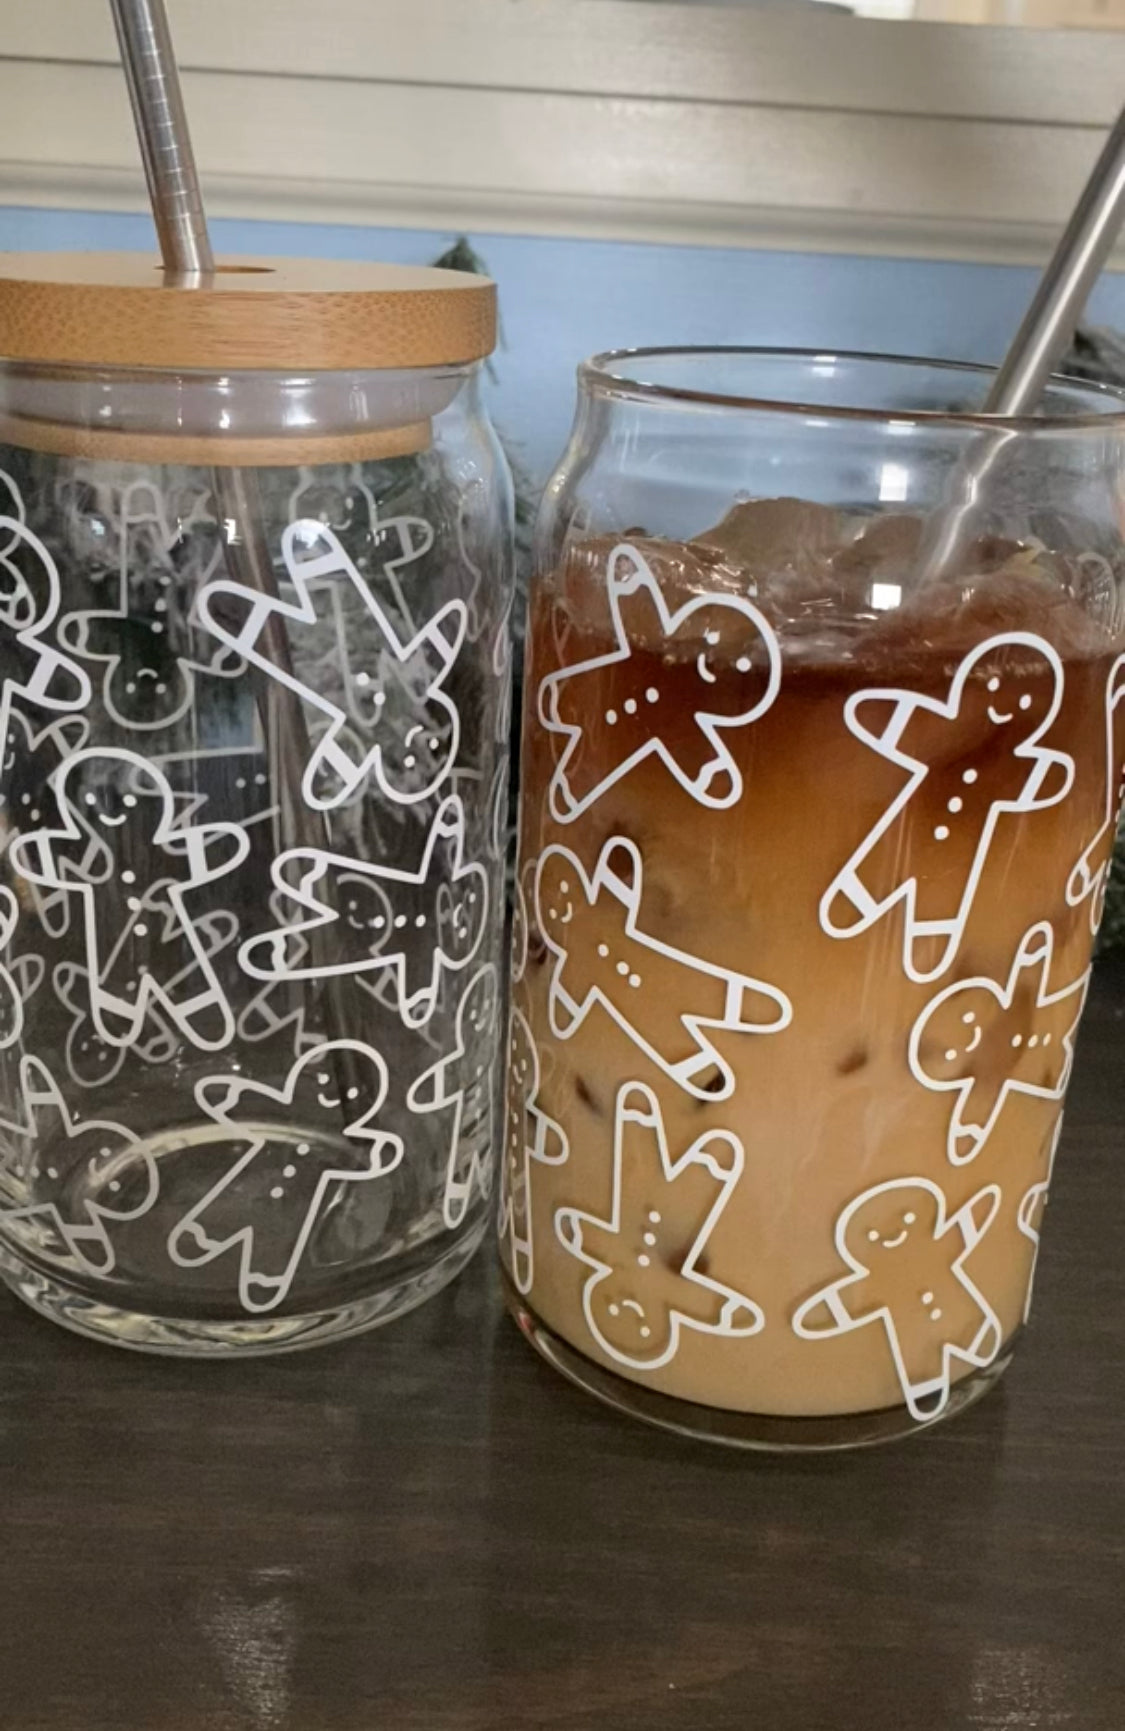 Gingerbread iced coffee glass